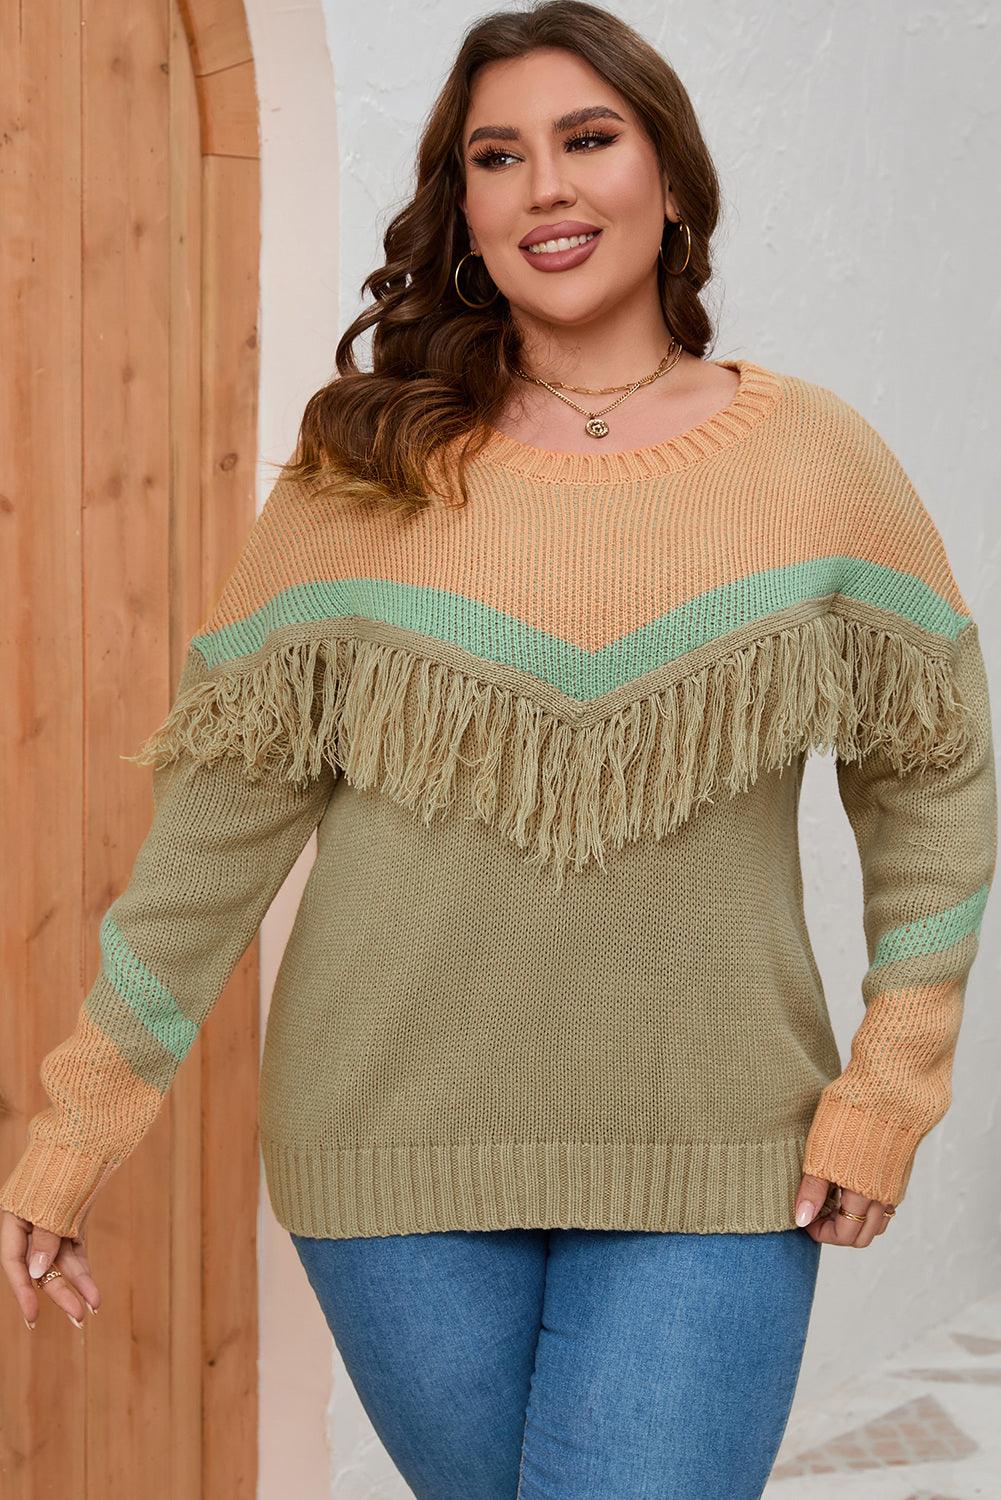 Contrast Long Sleeve Plus Size Fringe Sweater - MXSTUDIO.COM